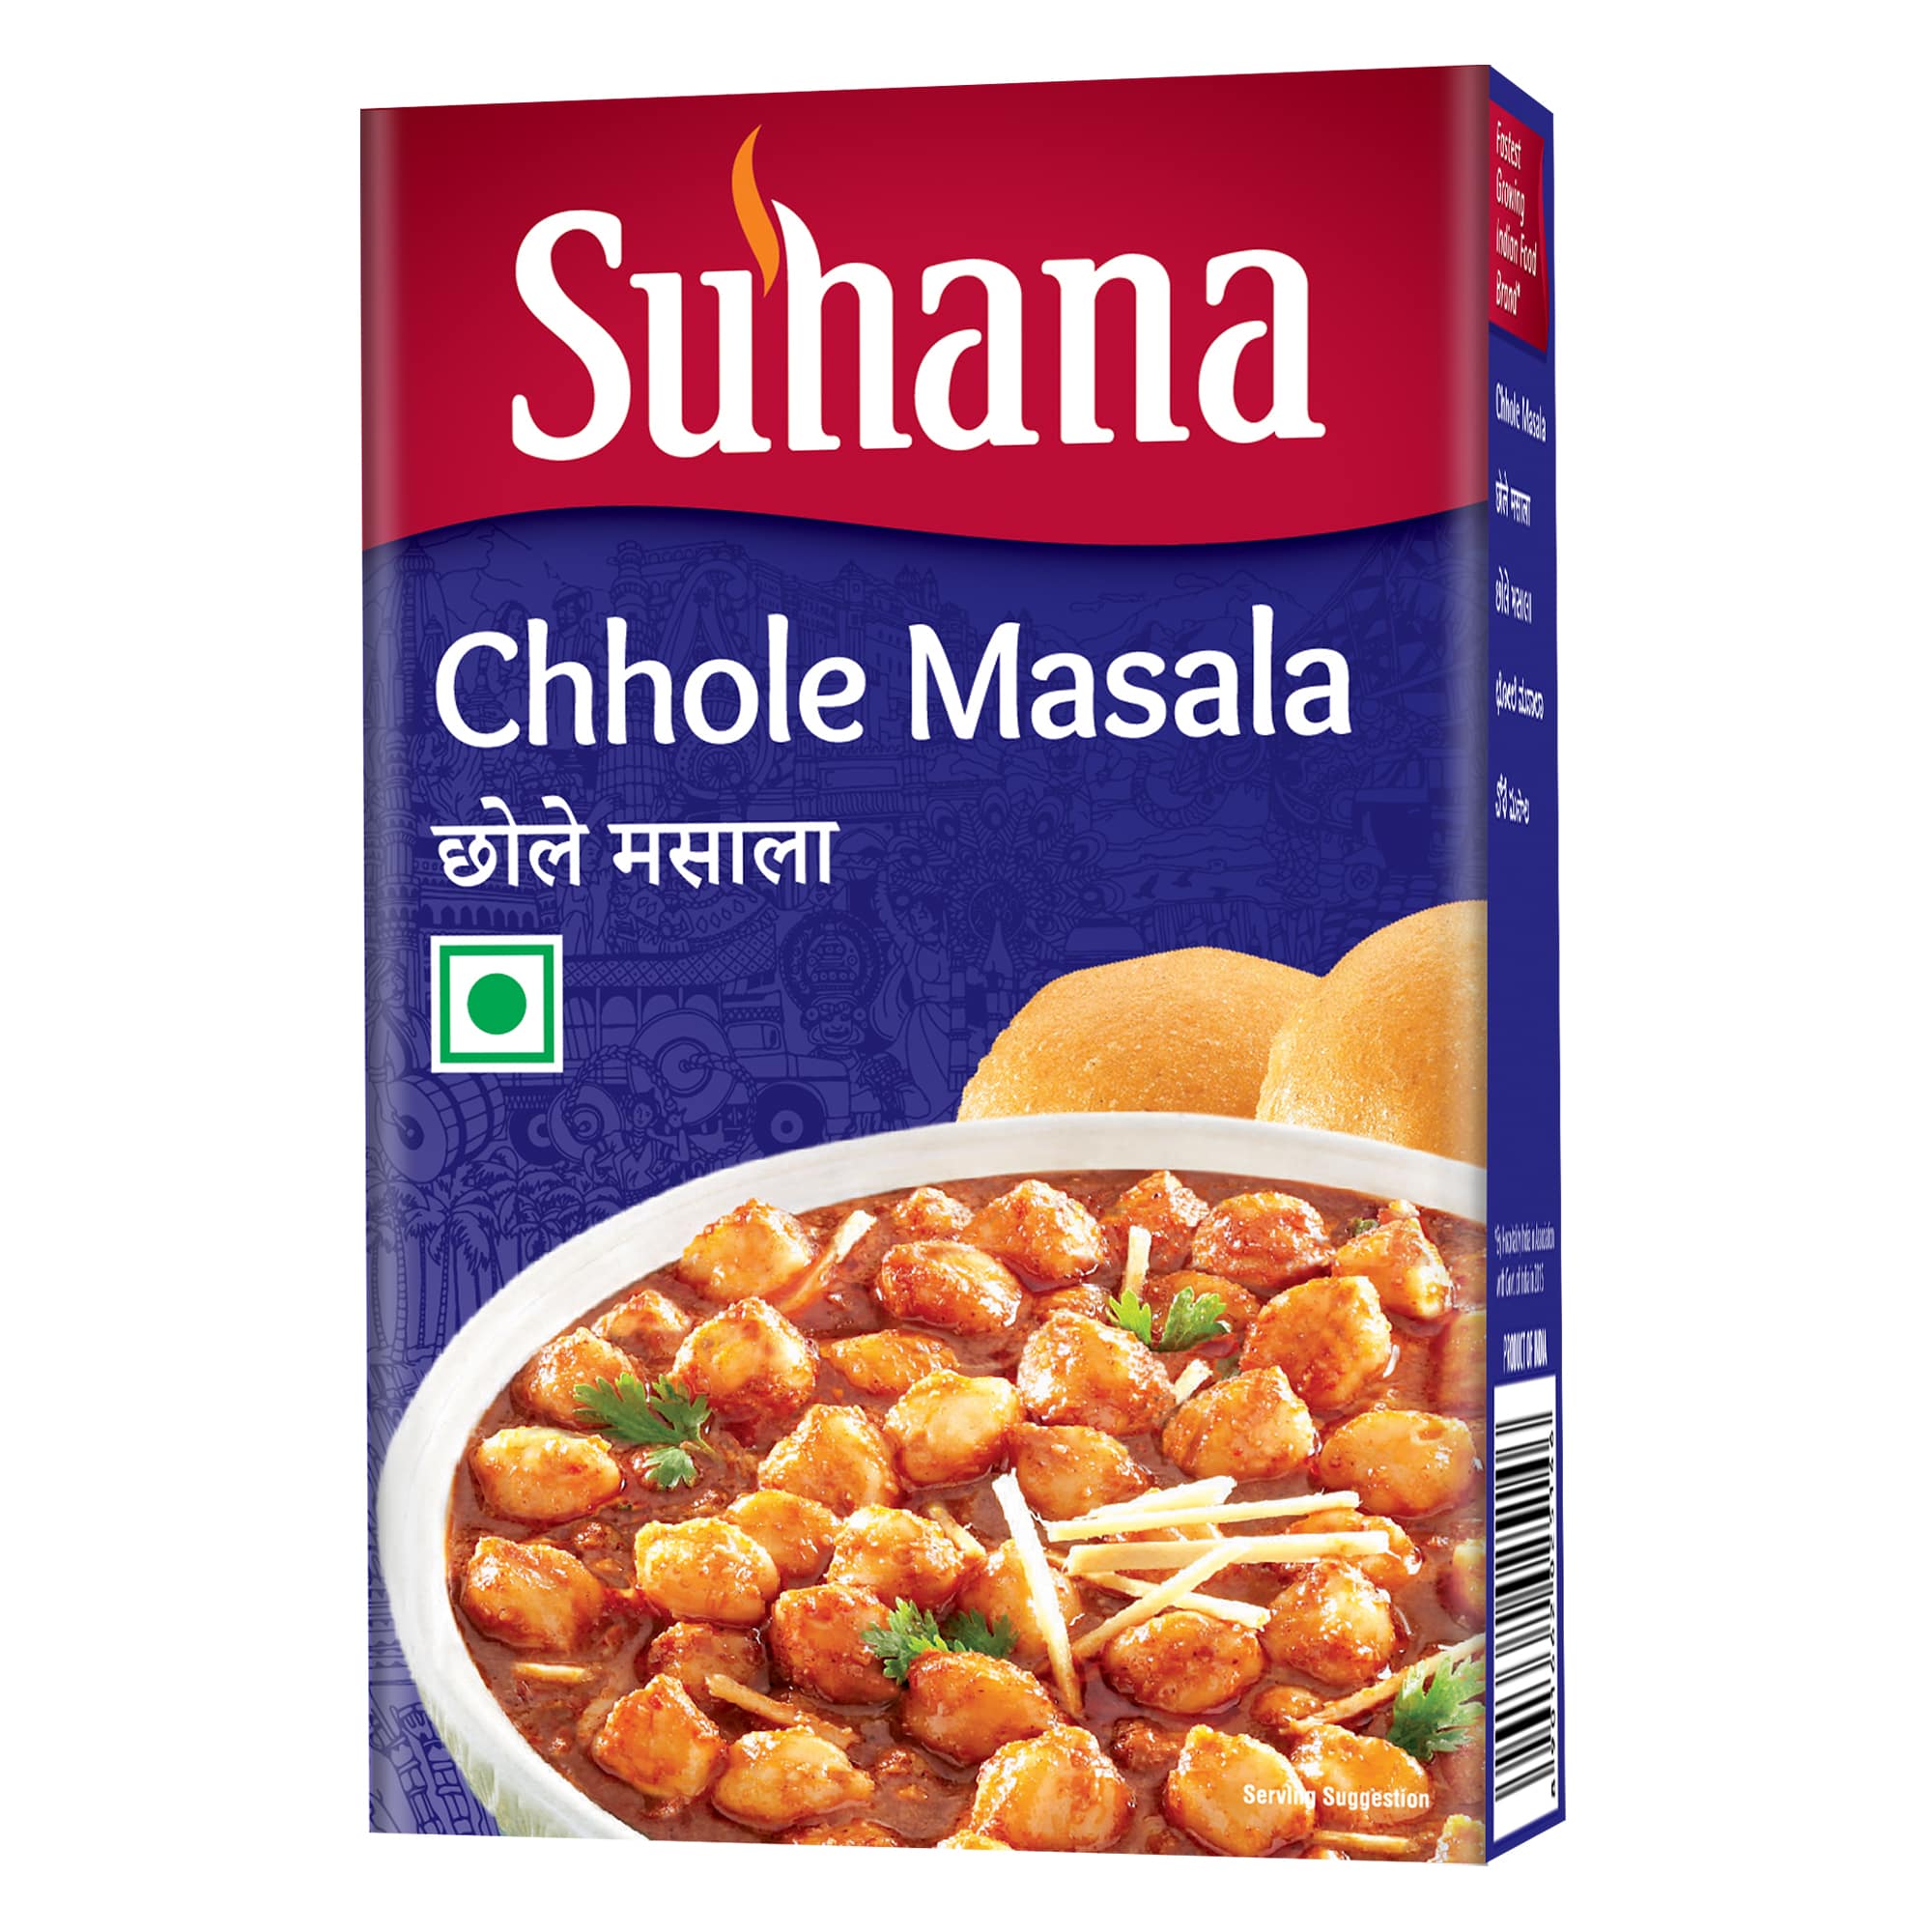 Suhana Chhole Masala Box